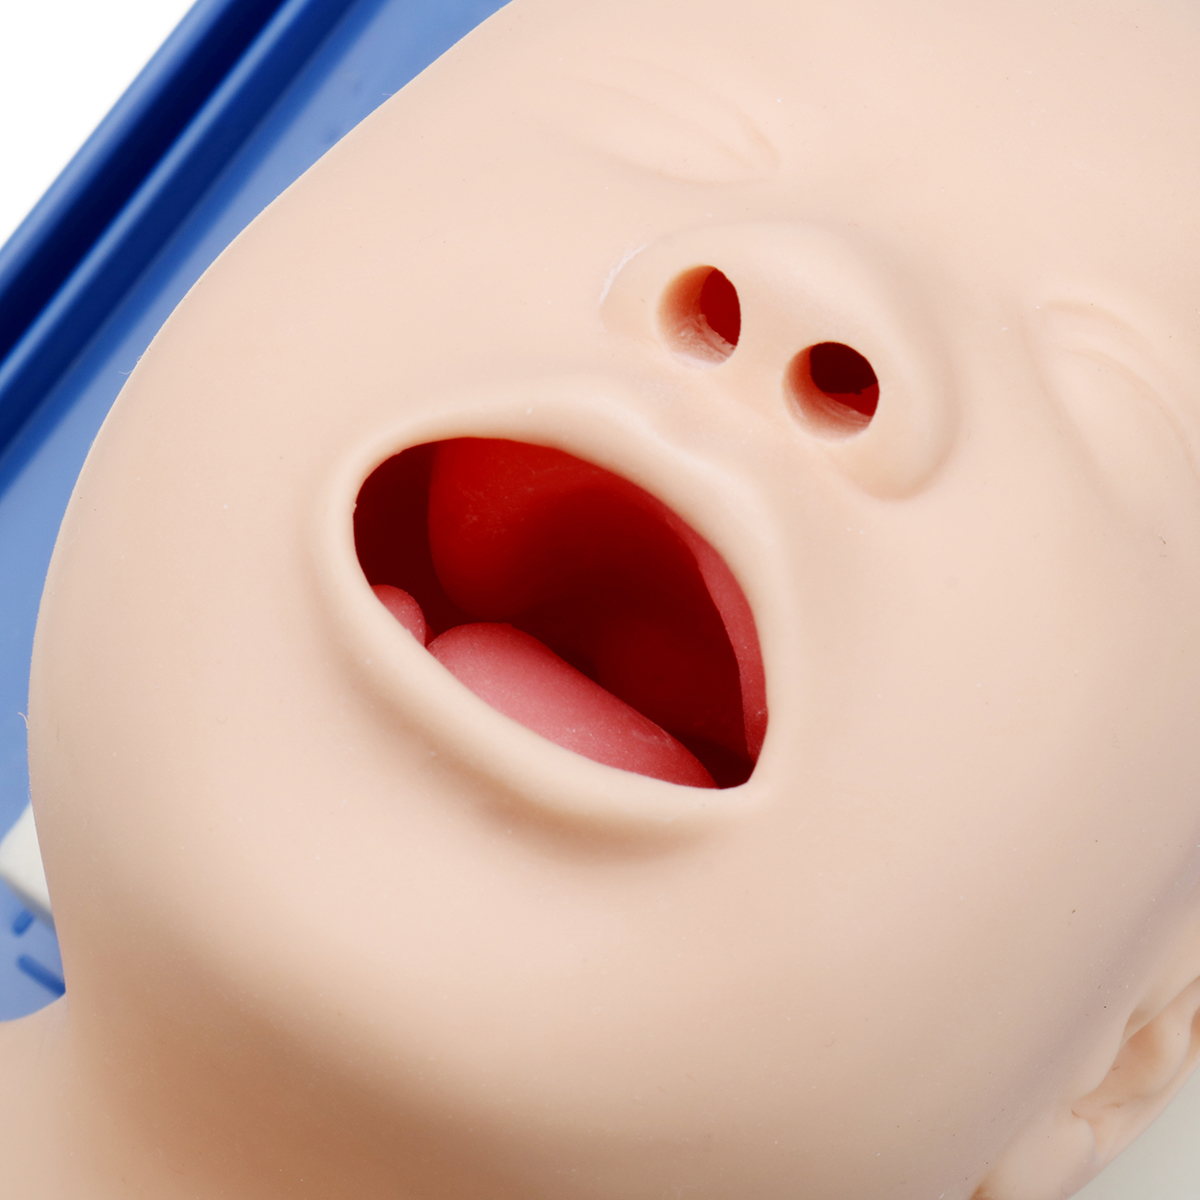 Intubation Manikin Study Teaching Model Baby Infant Airway Management Trainer Medical Model 59